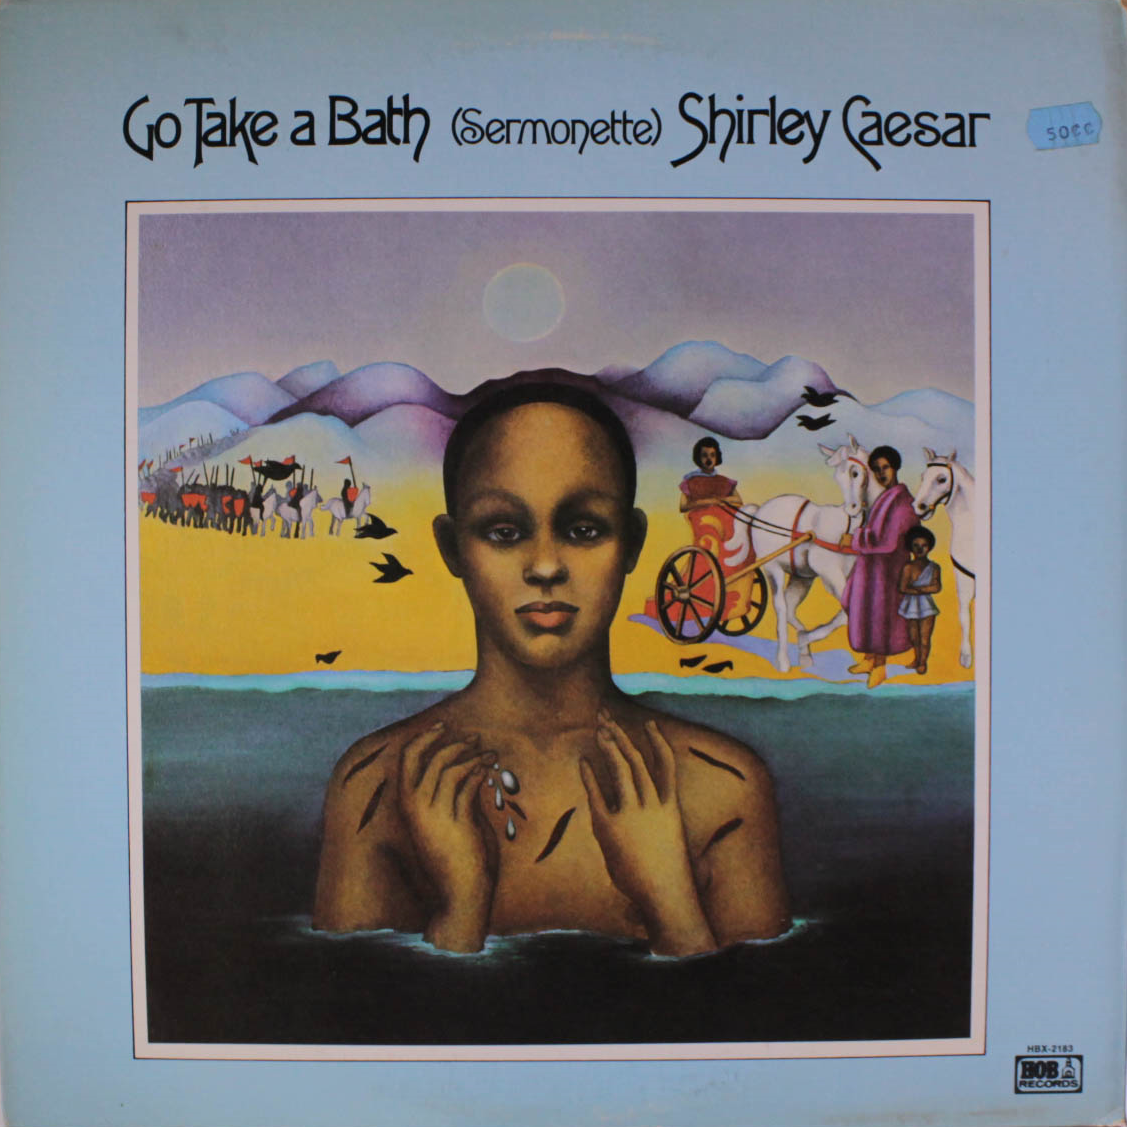 SHIRLEY CAESAR - Go Take A Bath (Sermonette) cover 